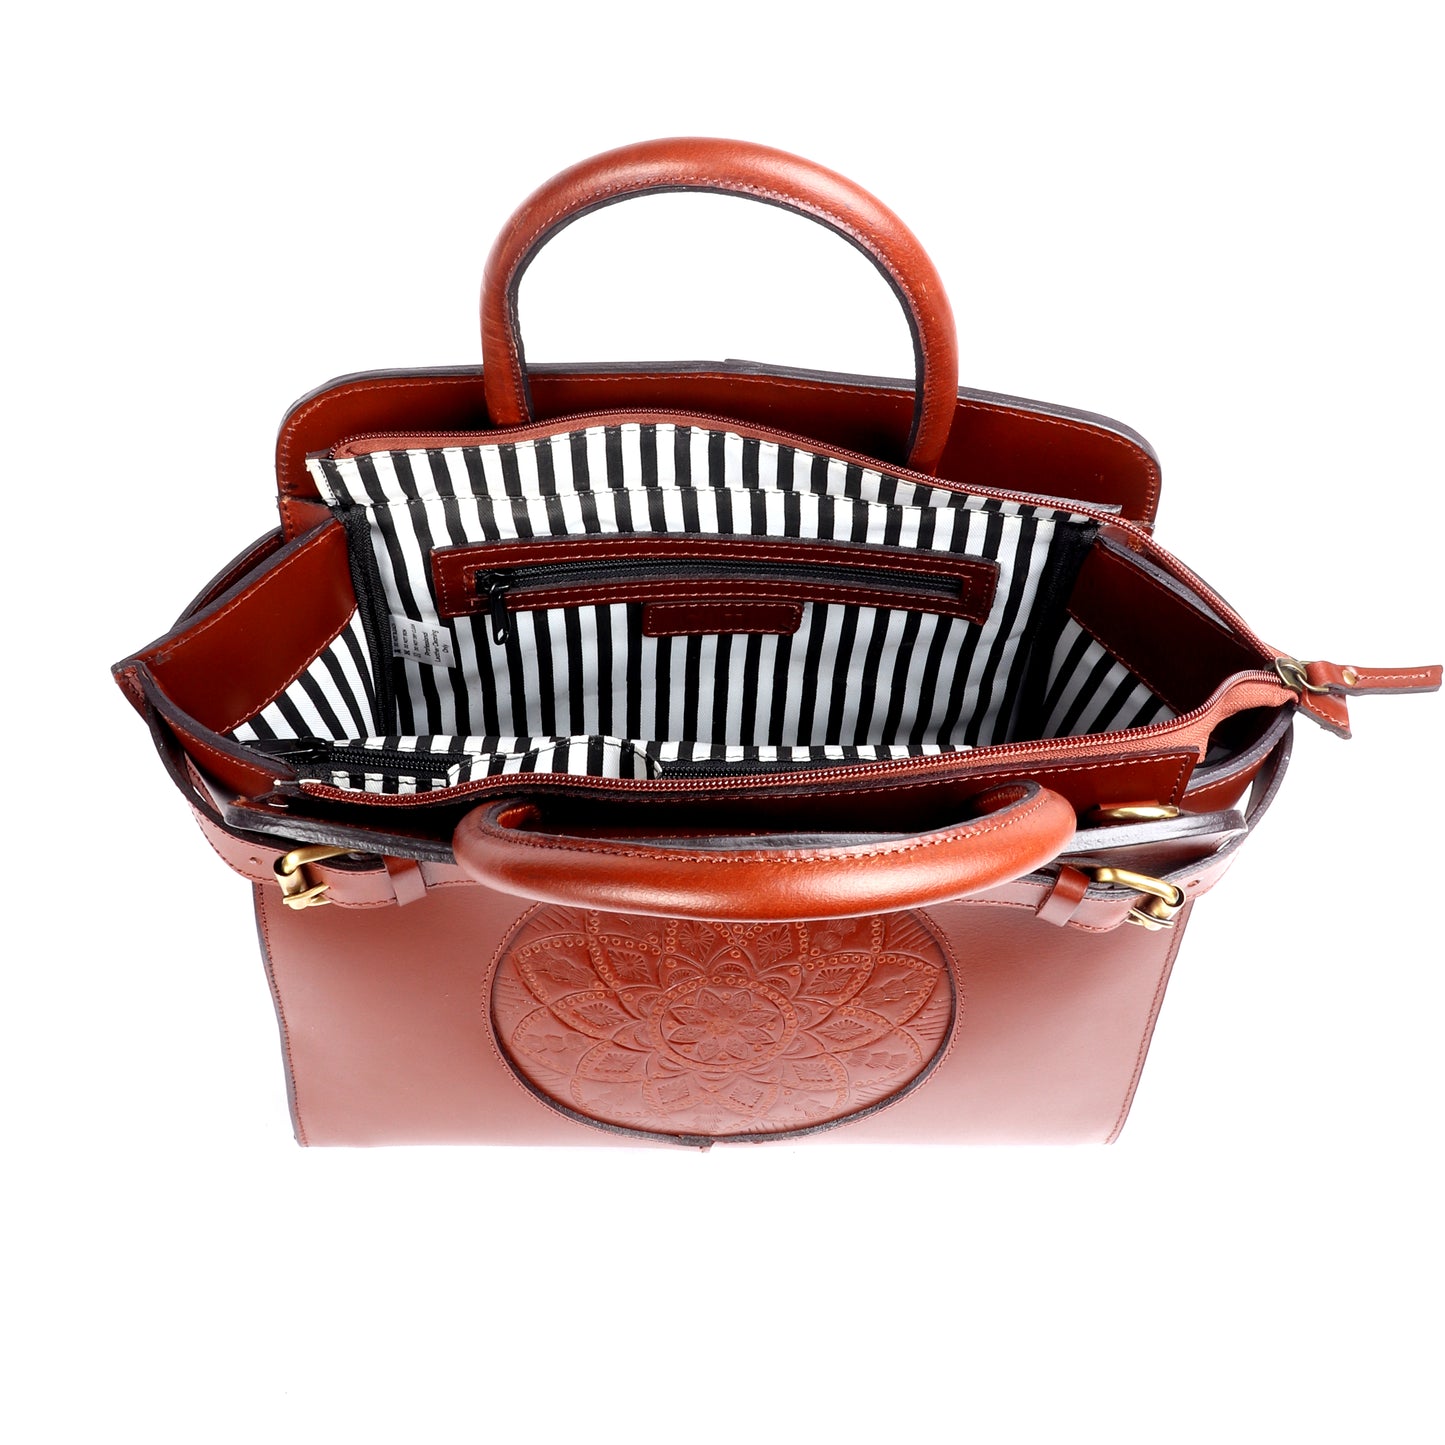 Europa Premium Brown Leather handbag